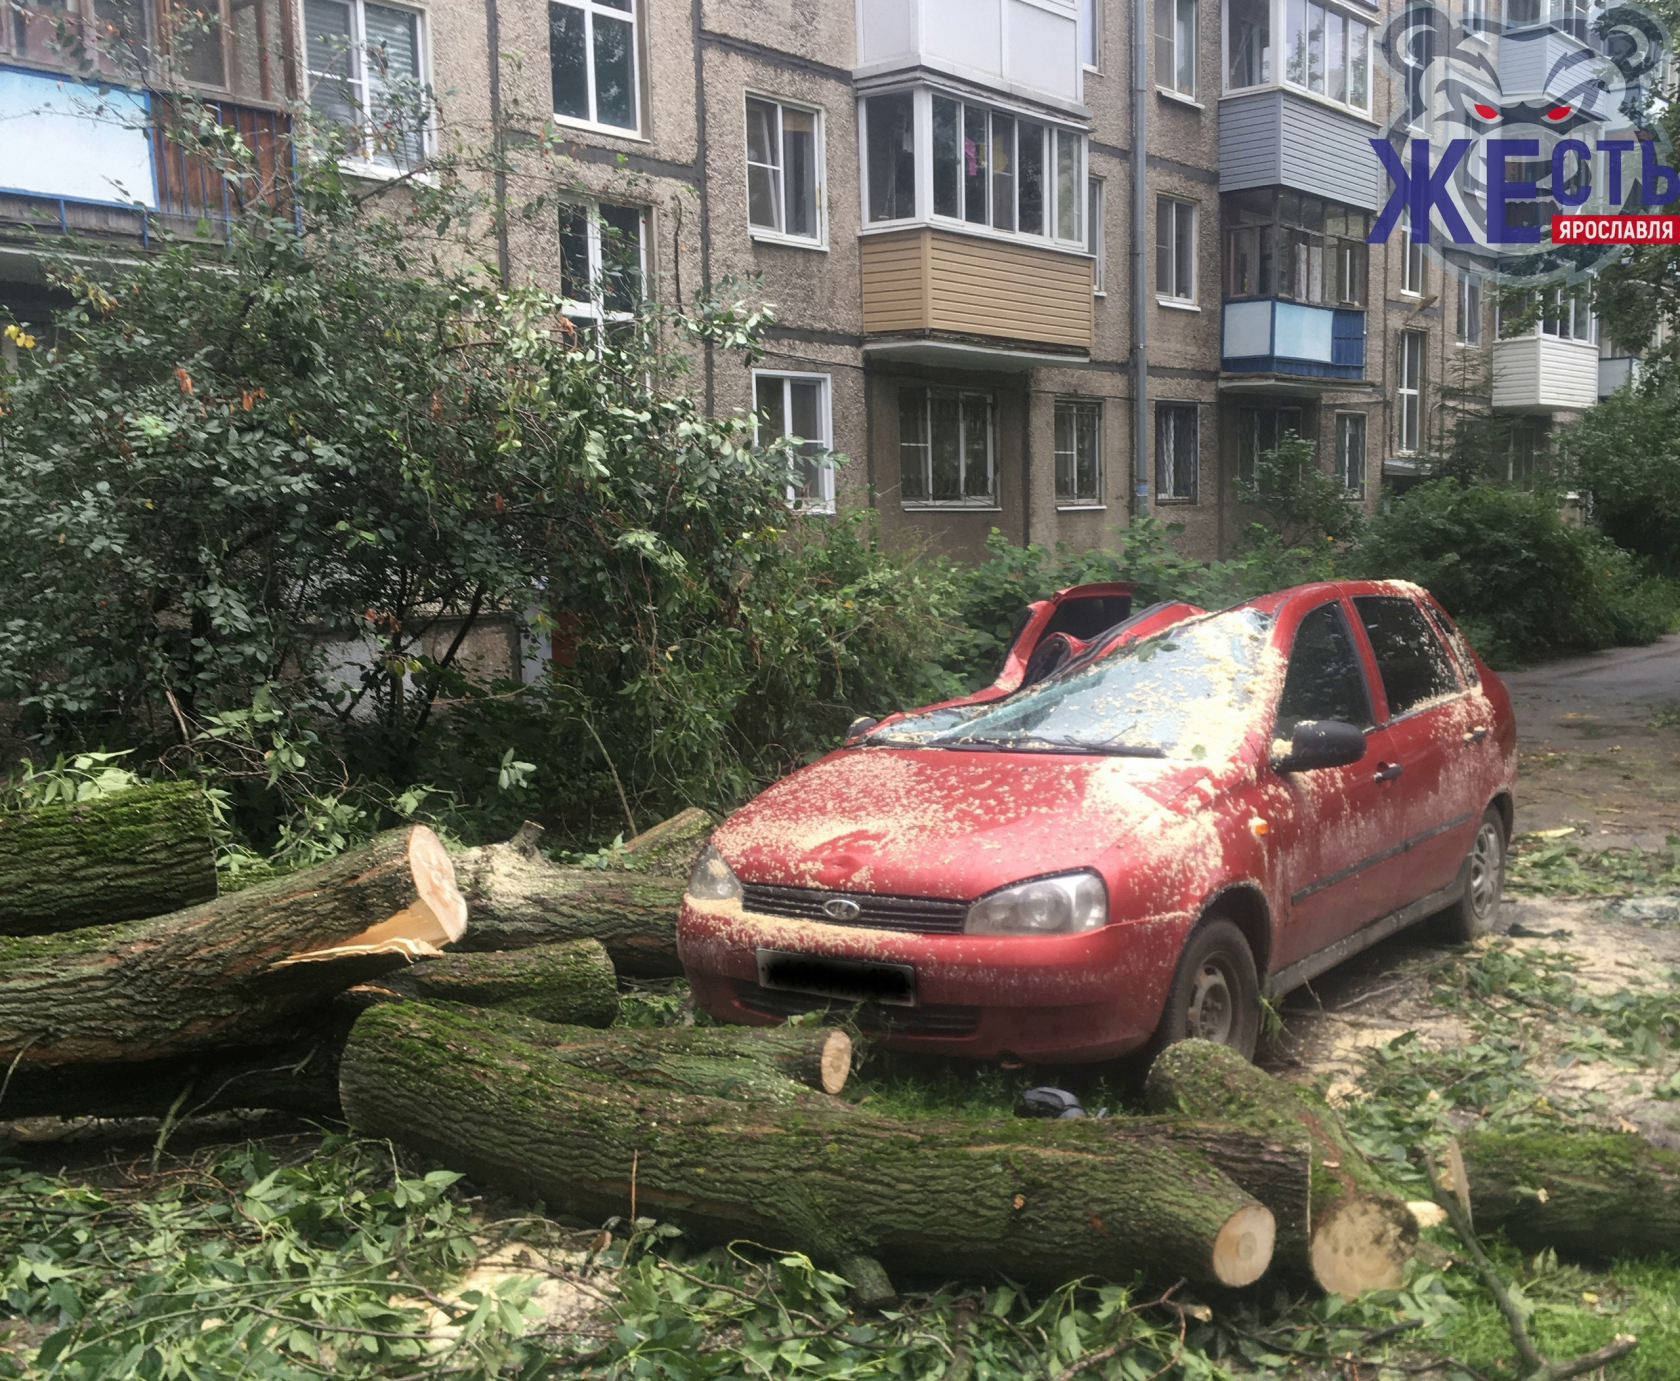 Во дворе в центре Ярославля упавшее дерево раздавило легковушку | 31.07.23  | Яркуб